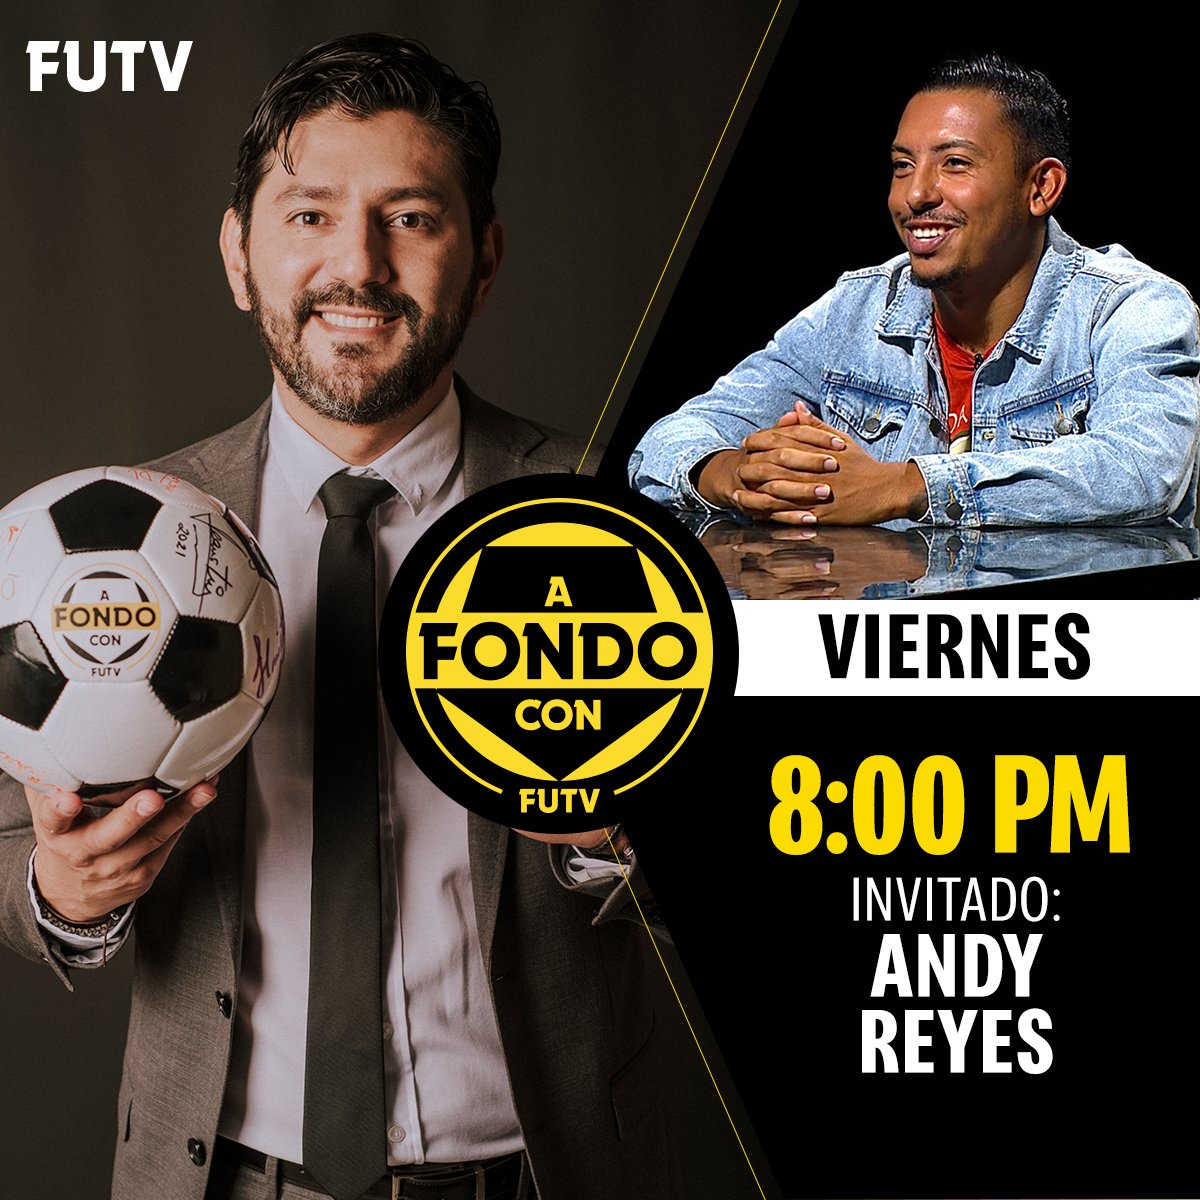 📺 | A Fondo Con 🗣 | Andy Reyes ⏰ | 8:00 pm 🎙 | Gabriel Vargas 💛 | FUTV